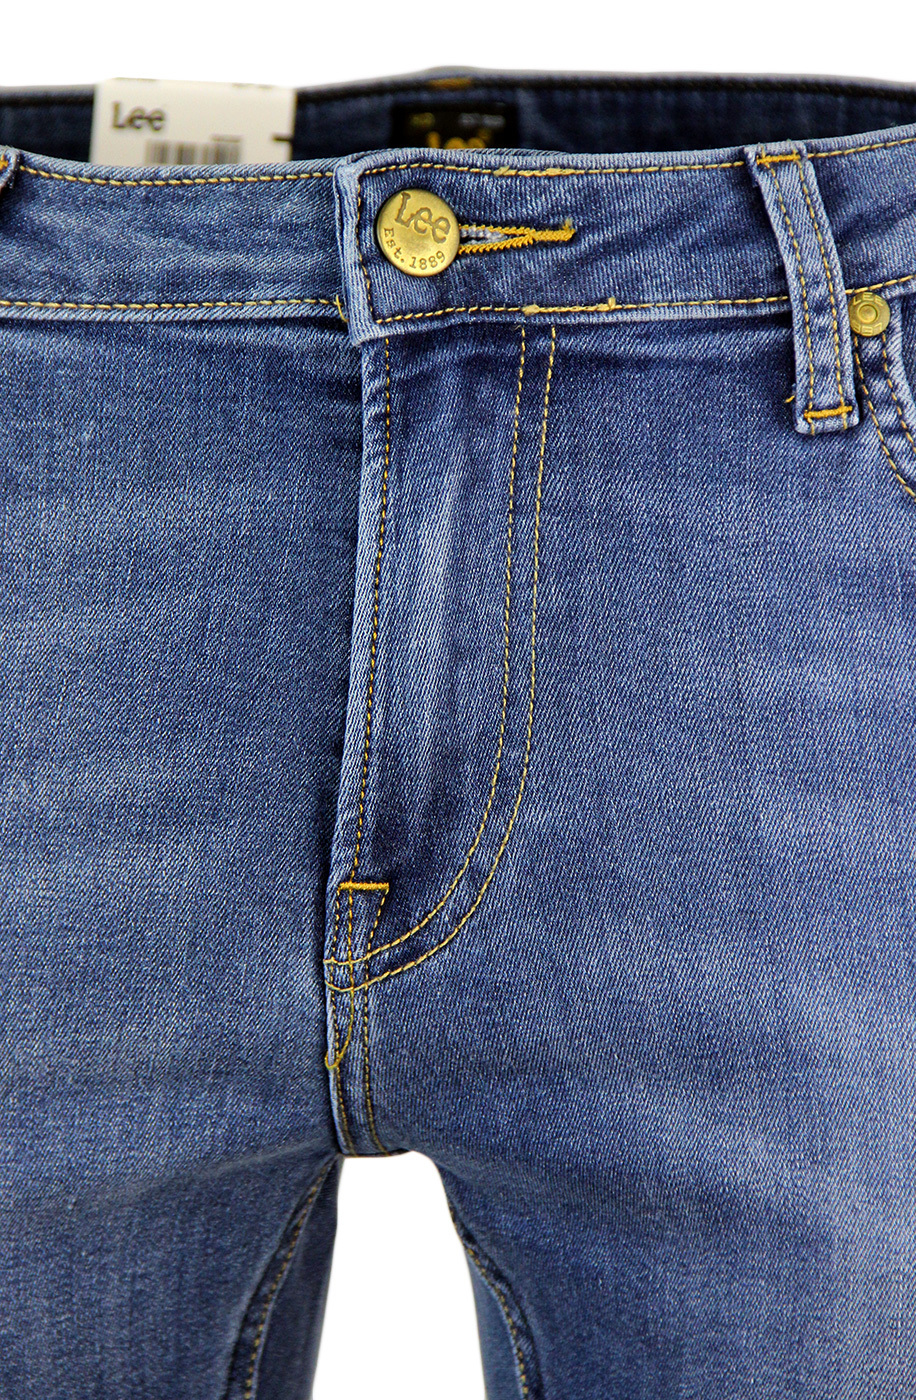 LEE Malone Retro Indie Mod Skinny Denim Jeans in Common Blue